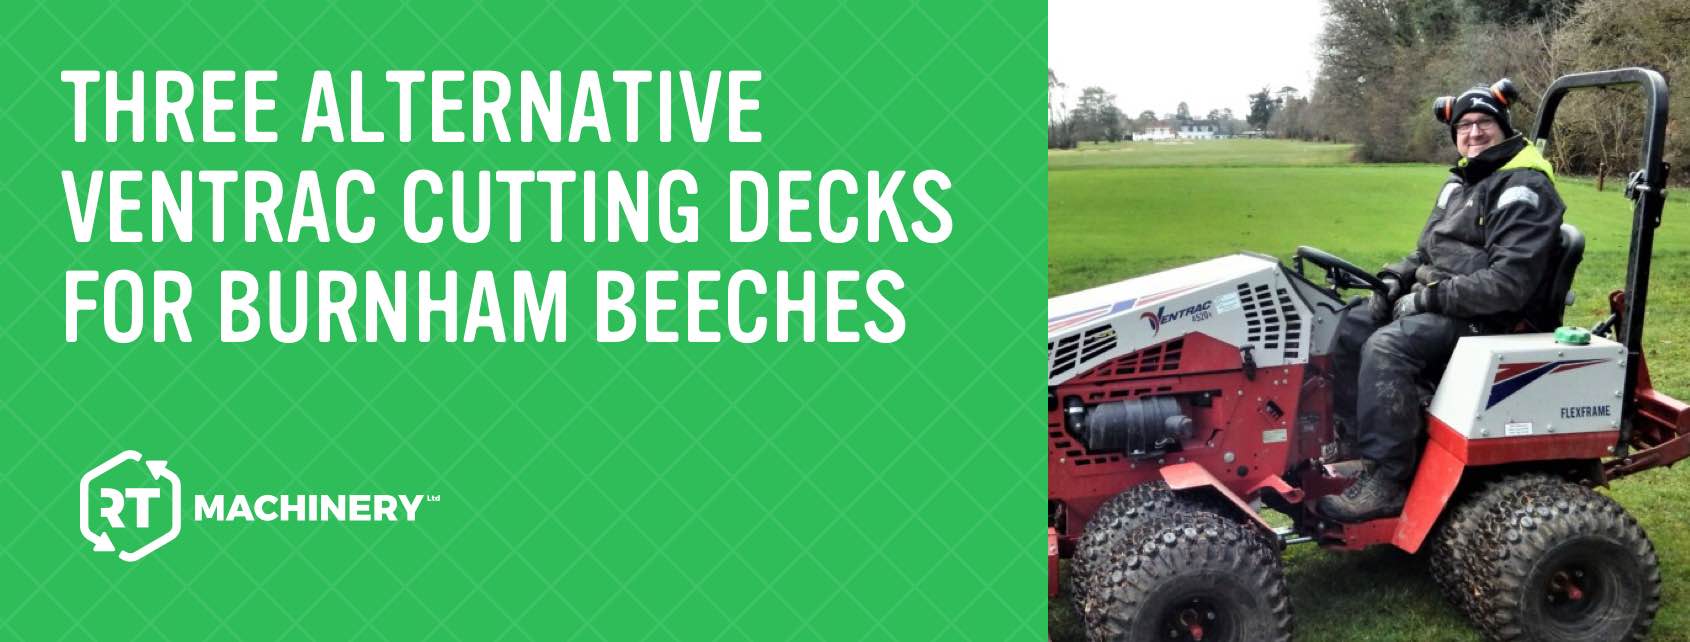 Three Alternative Ventrac Cutting Decks for Burnham Beeches